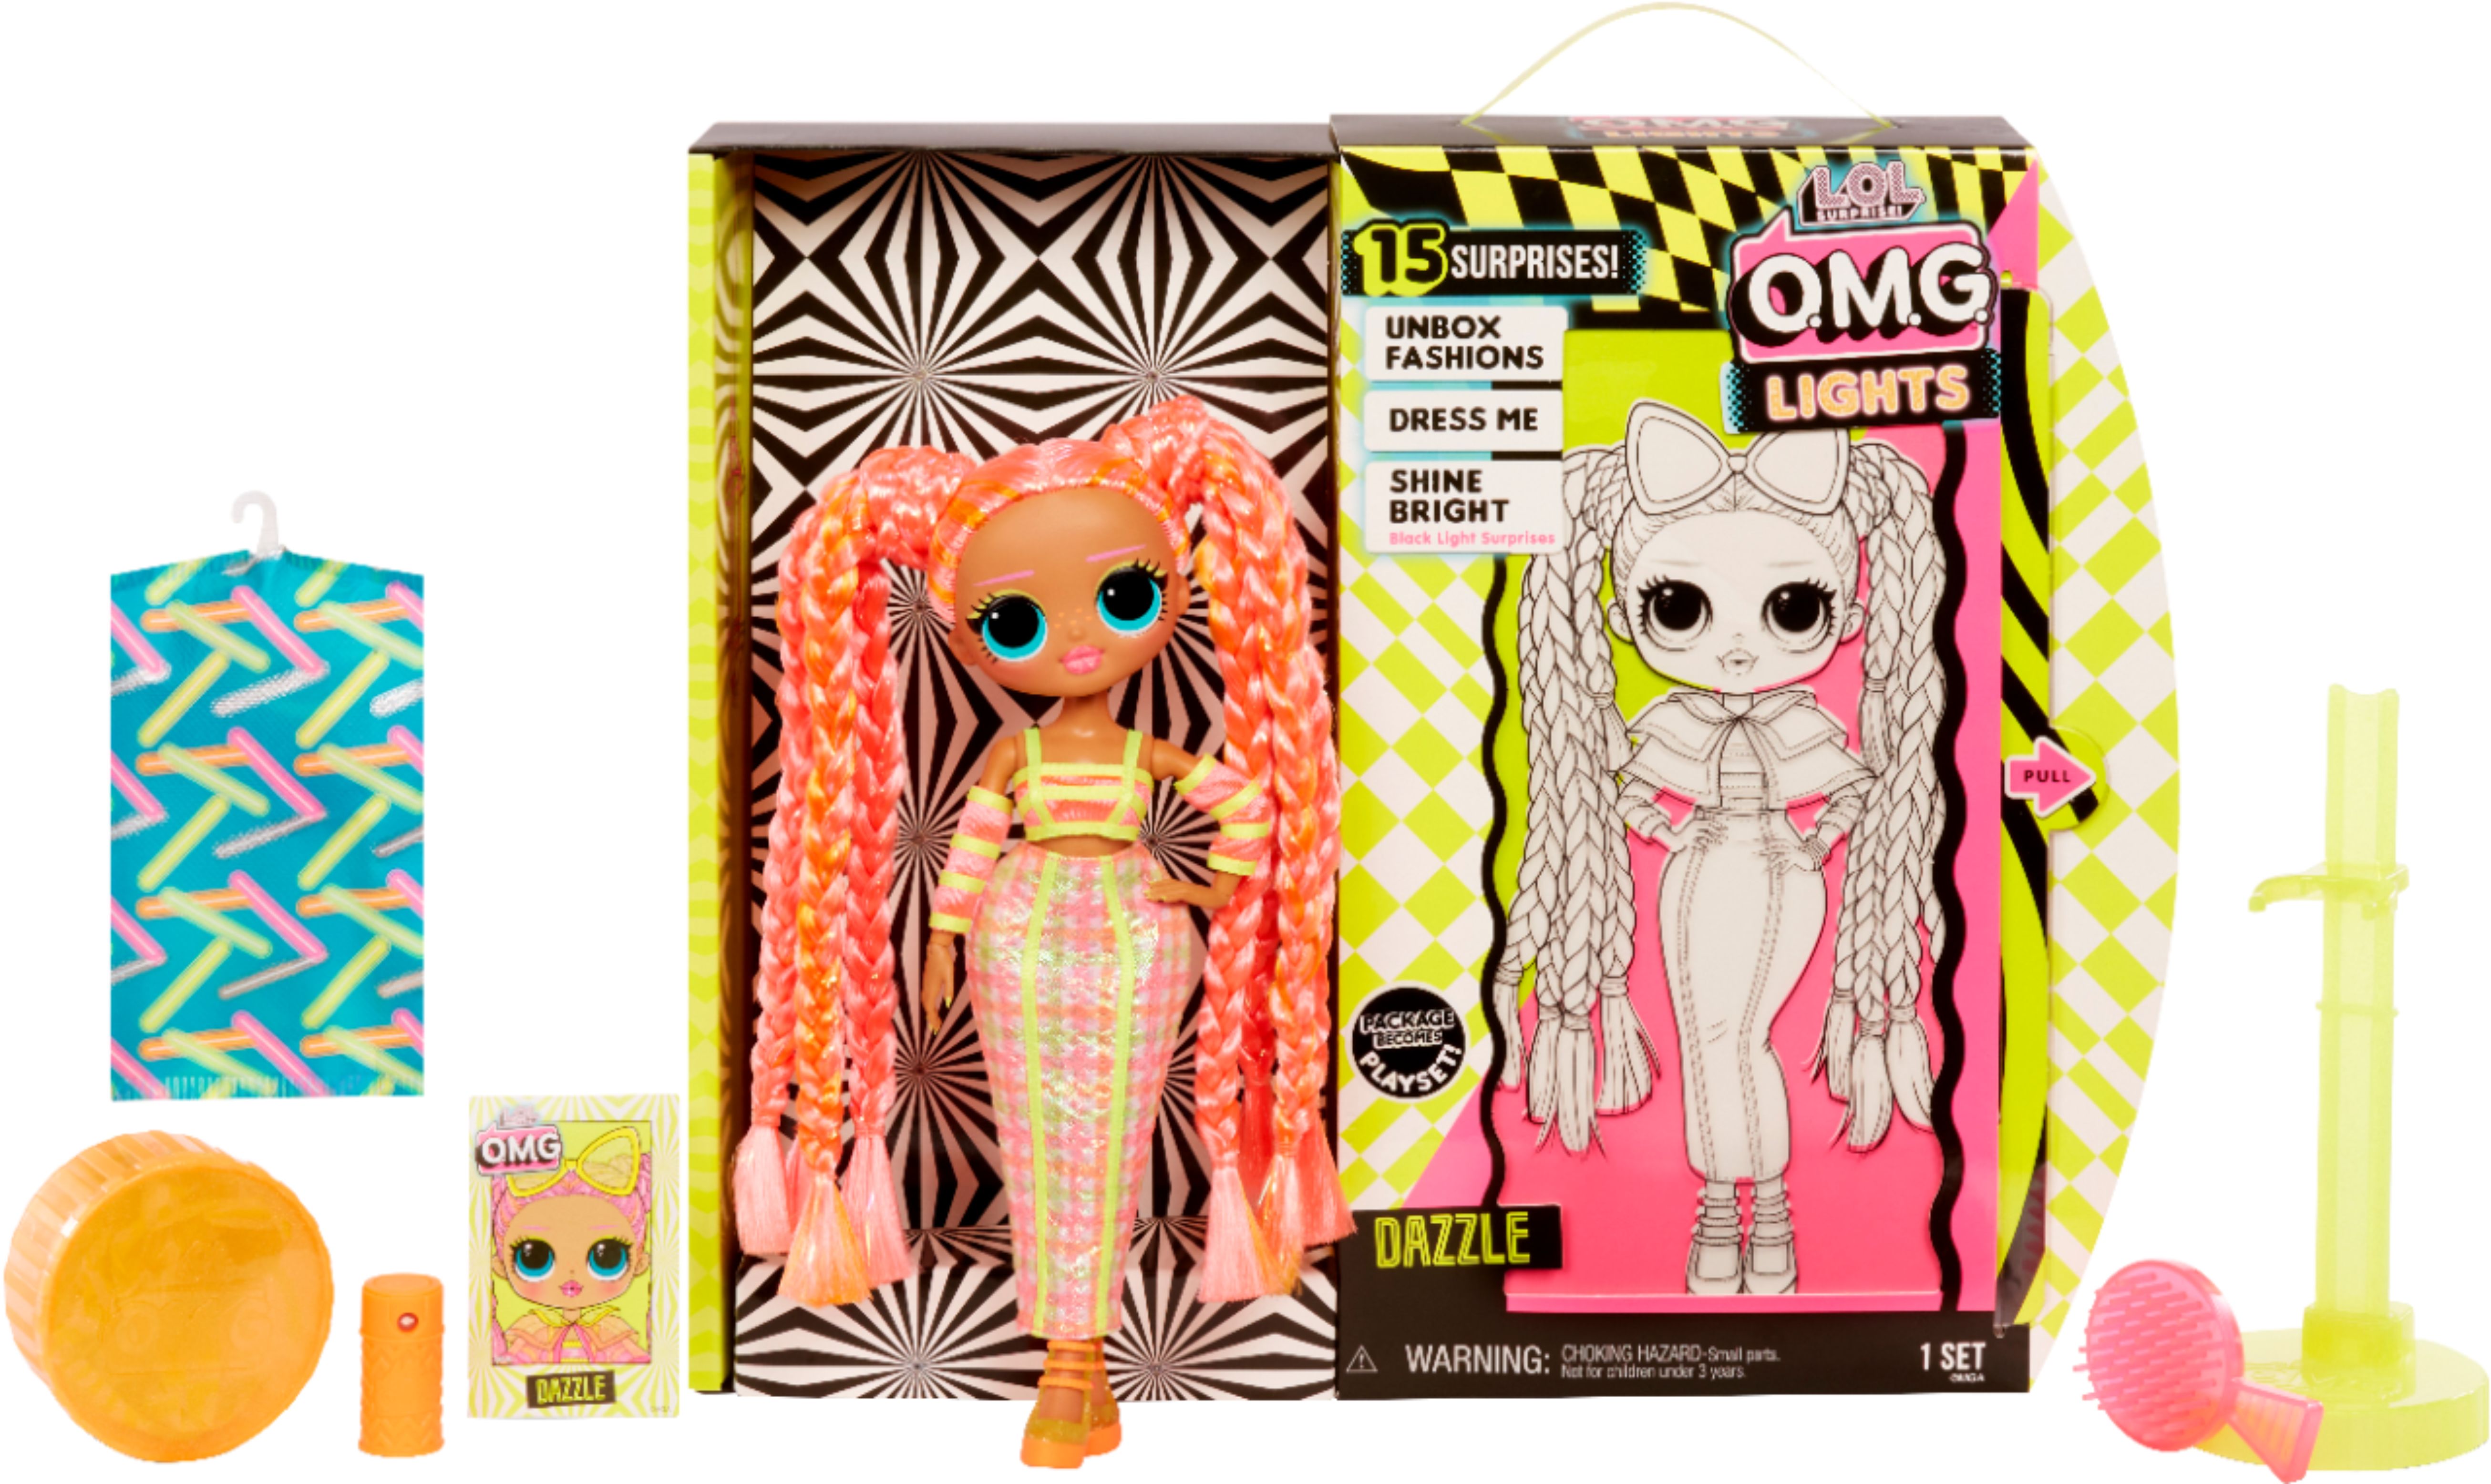 LOL Surprise! O.M.G. Lights Dazzle Fashion Doll with 15 Surprises - wide 7